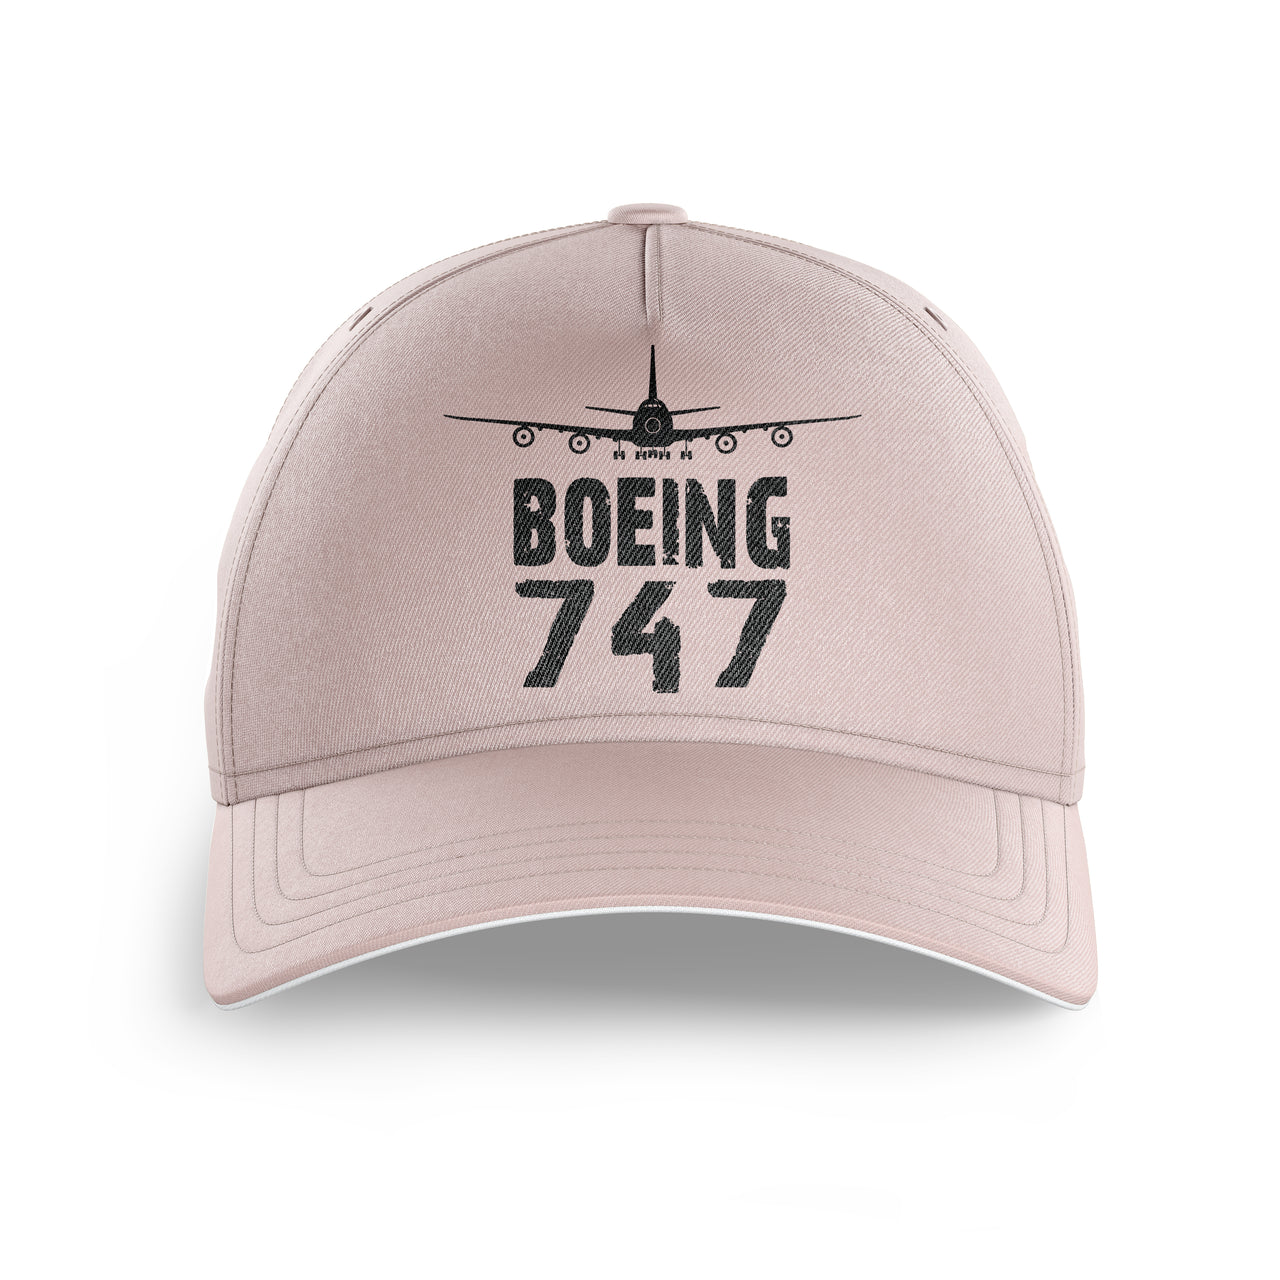 Boeing 747 & Plane Printed Hats